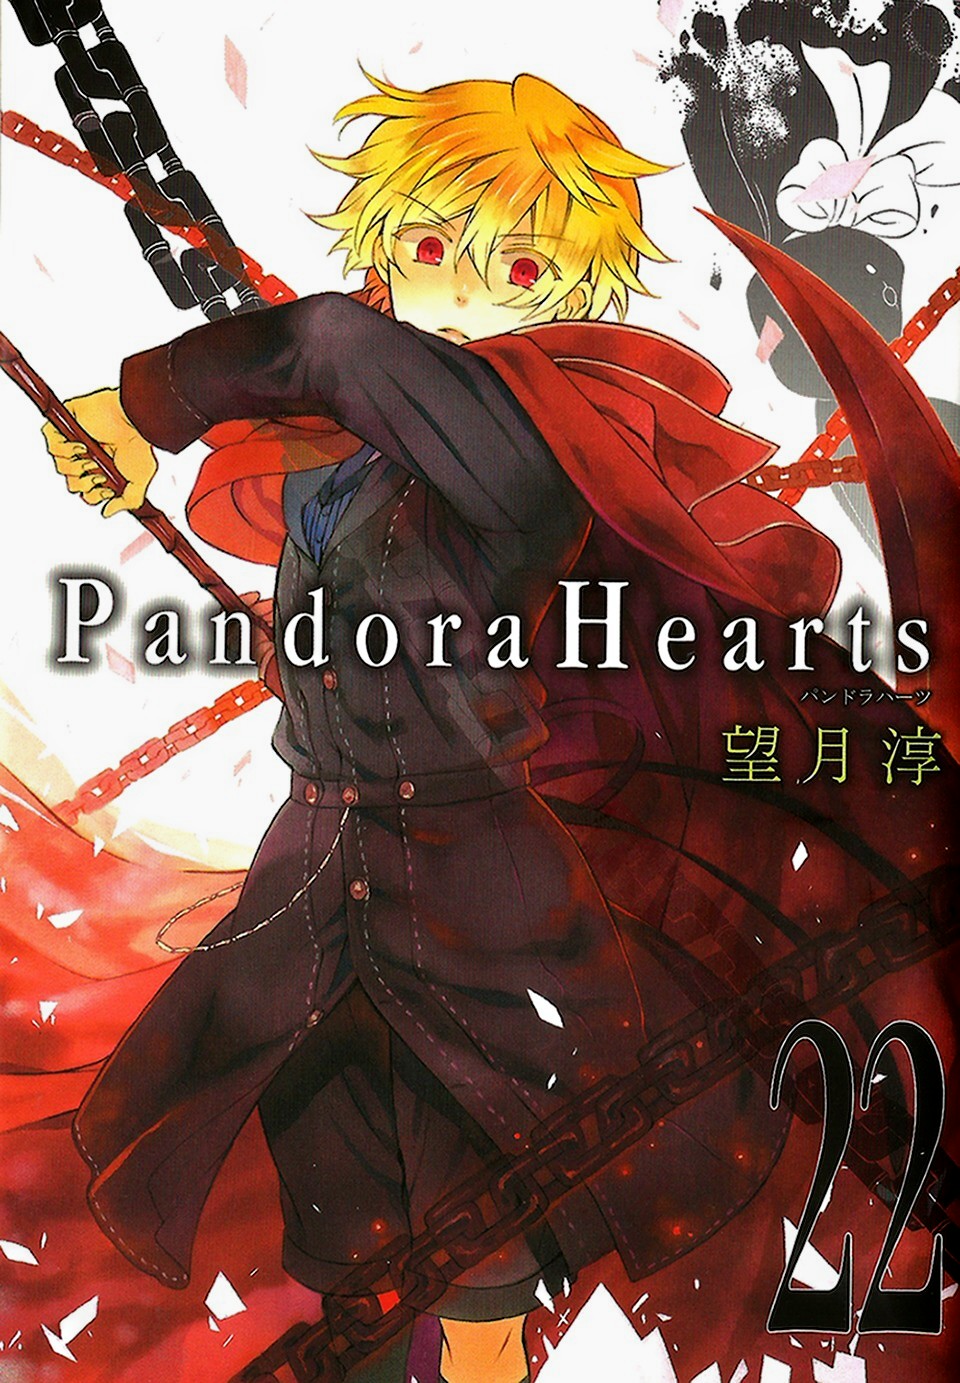 pandora hearts complete series box set